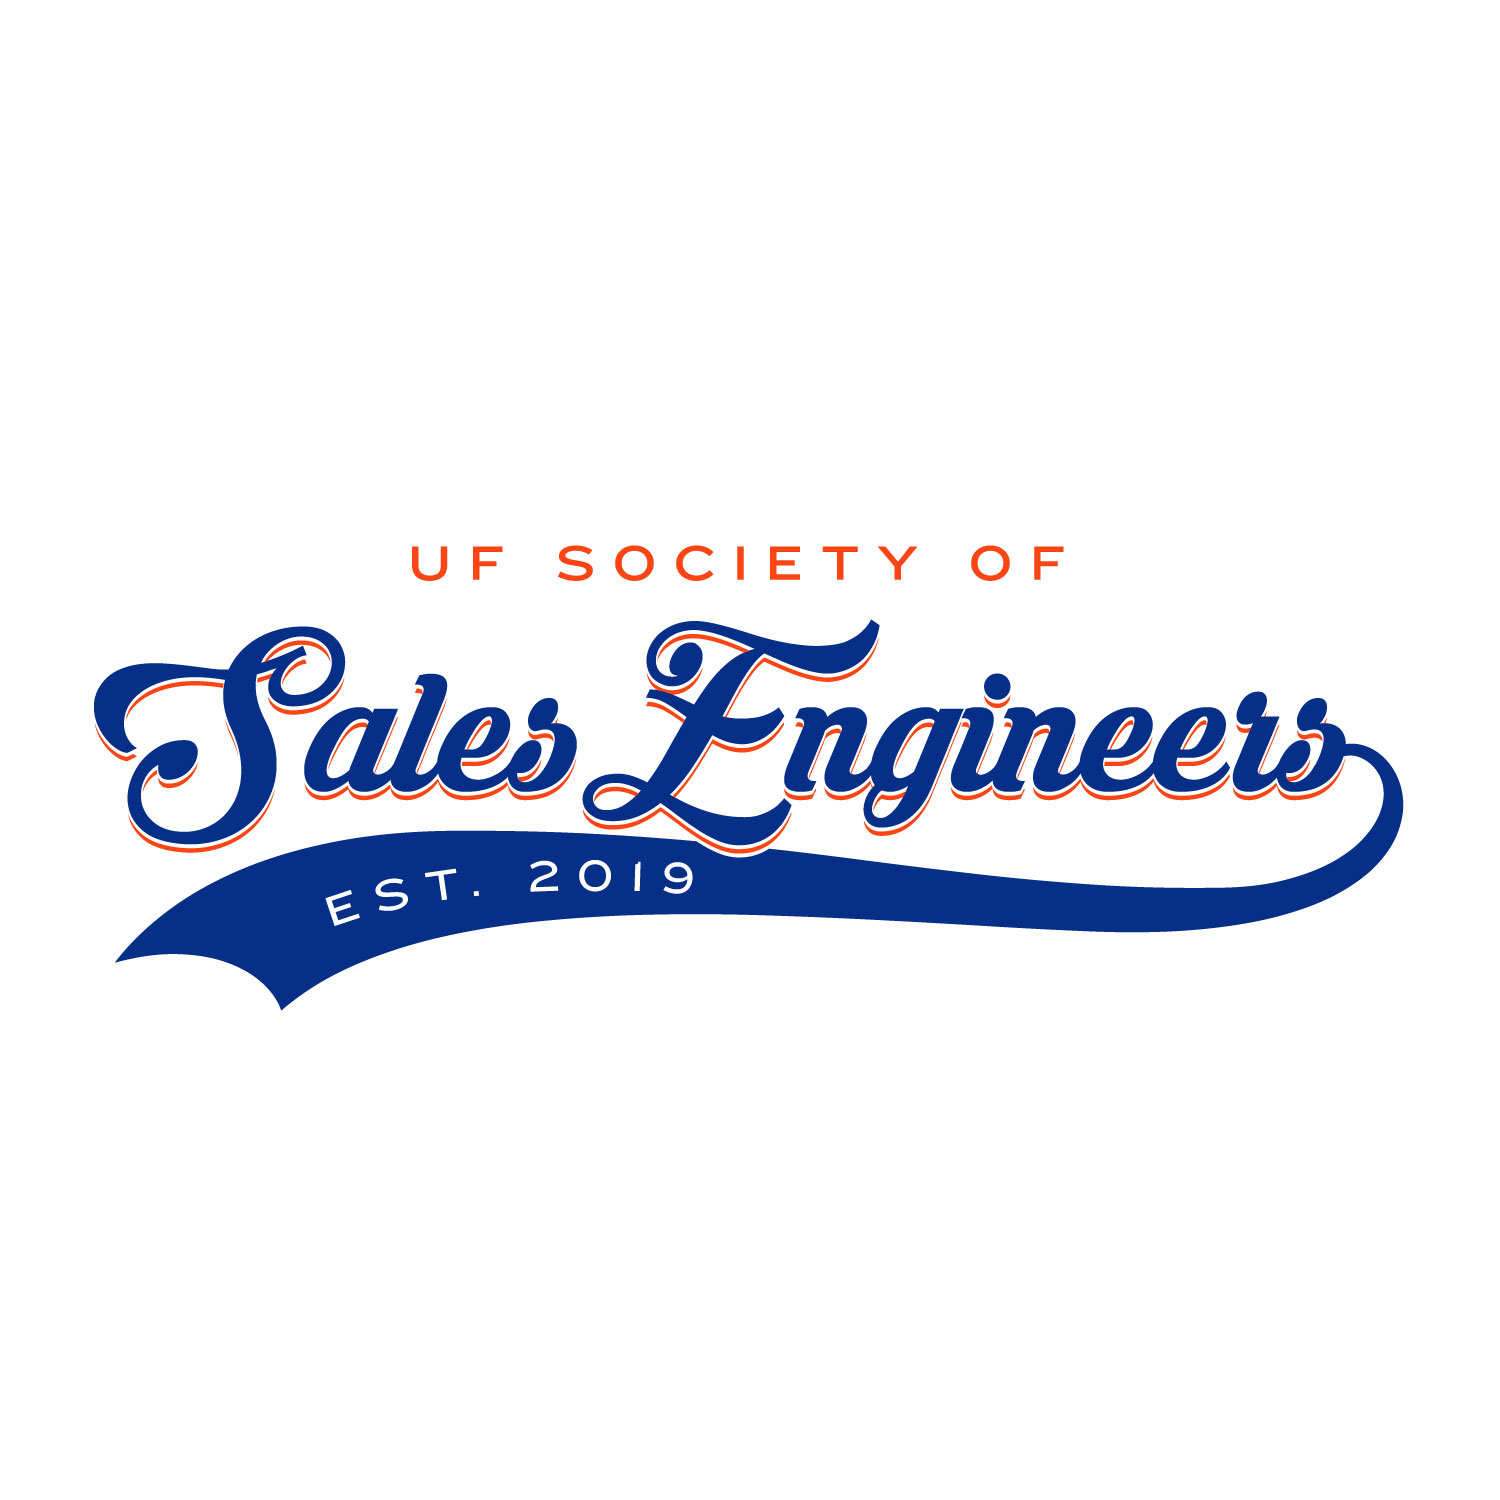 Society of Sales Engineers logo